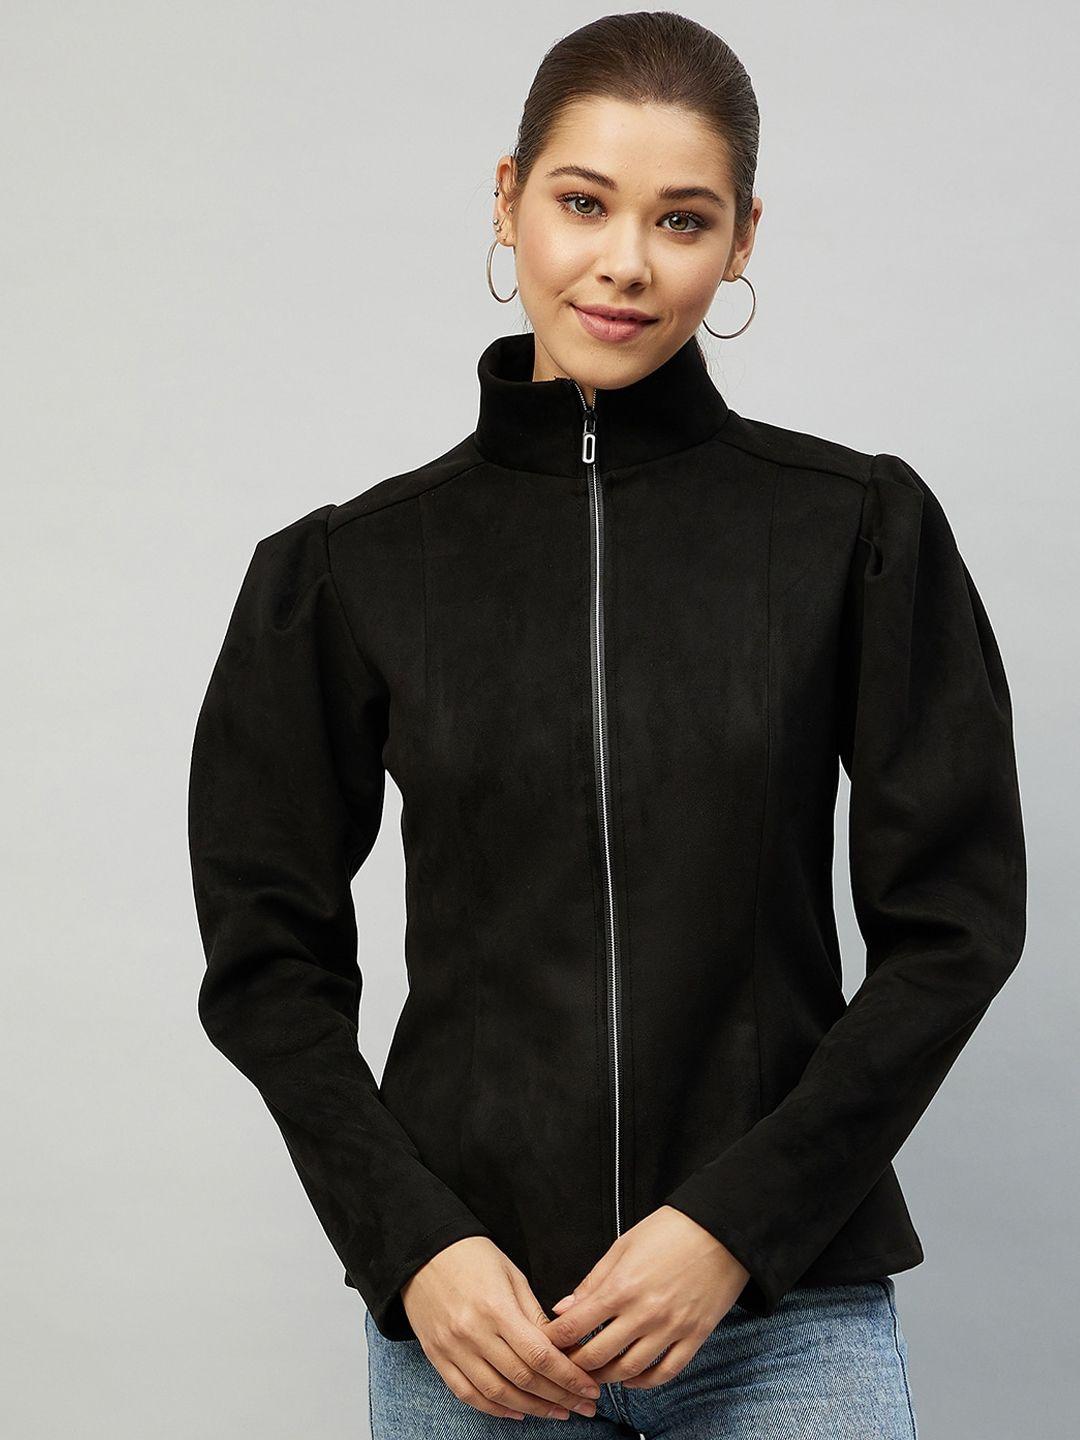 carlton-london-women-black-solid-mock-collar-tailored-jacket